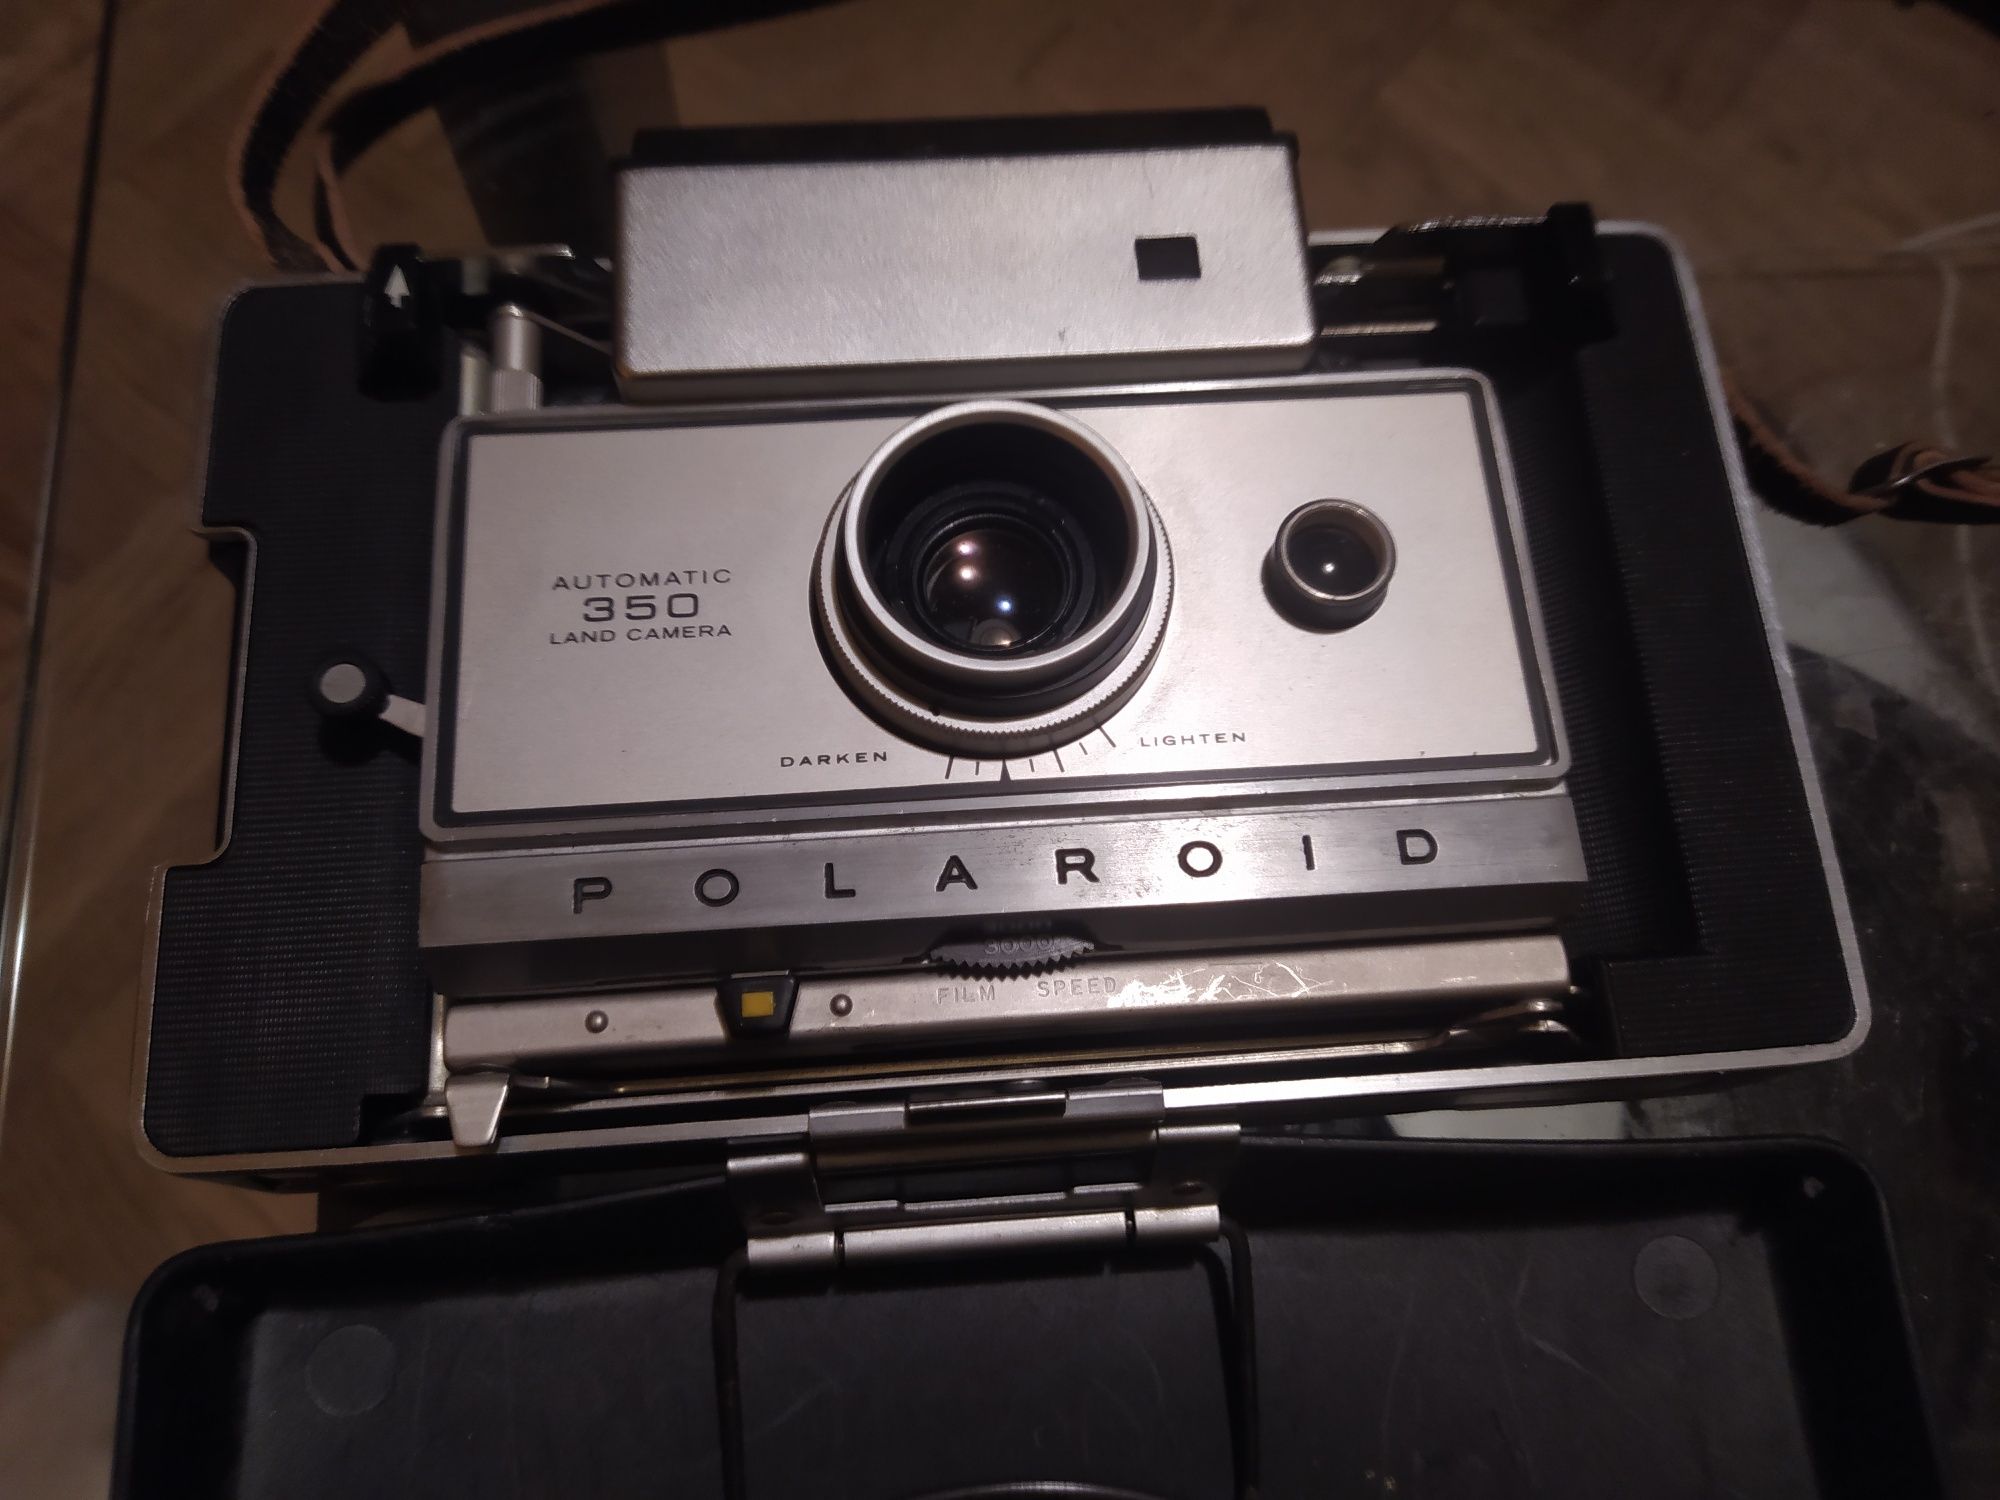 Polaroid automatic 350 land camera